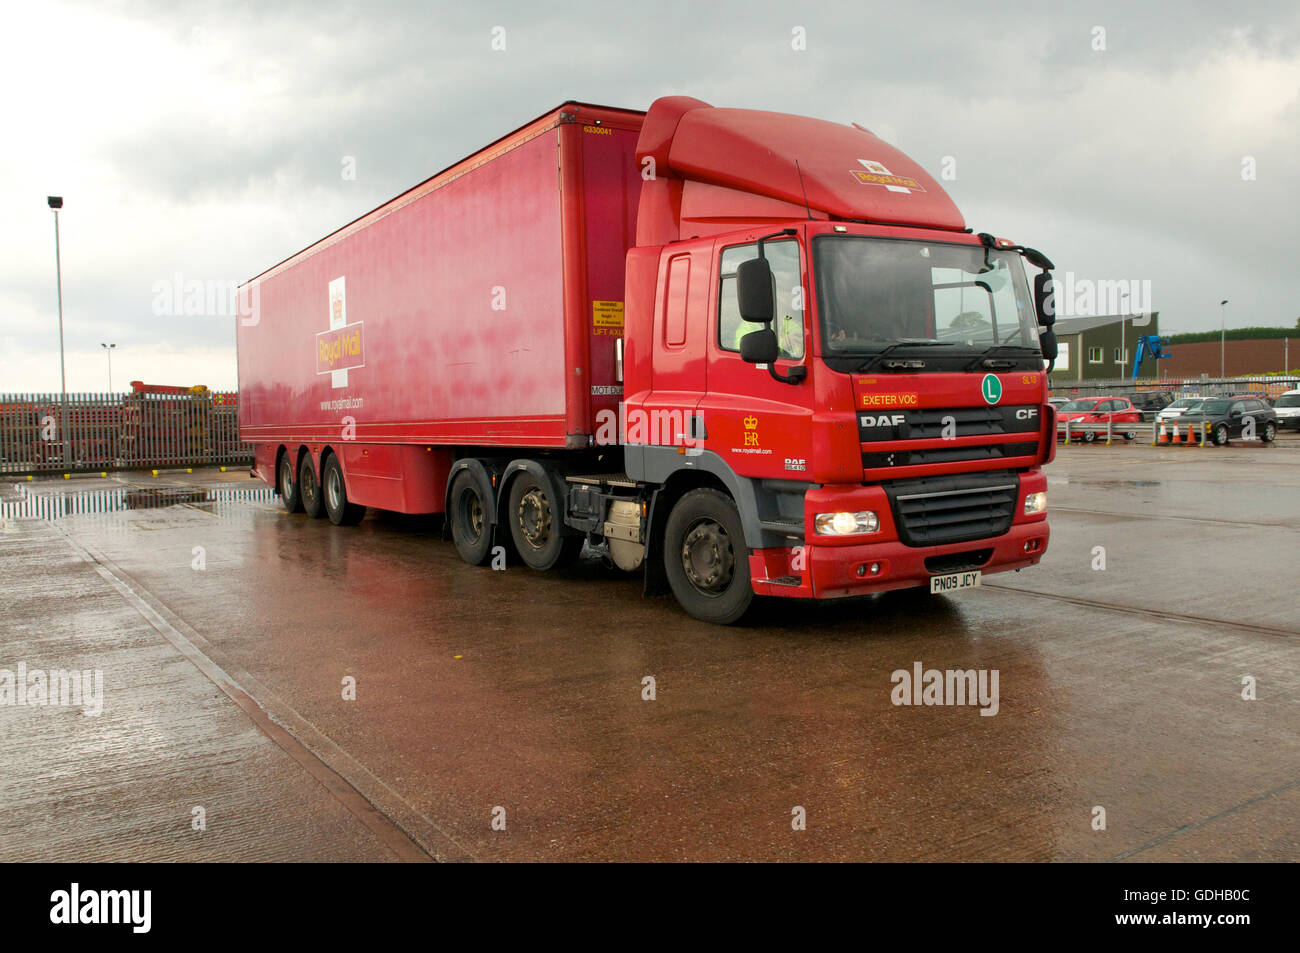 Royal Mail lorry, UK Stock Photo